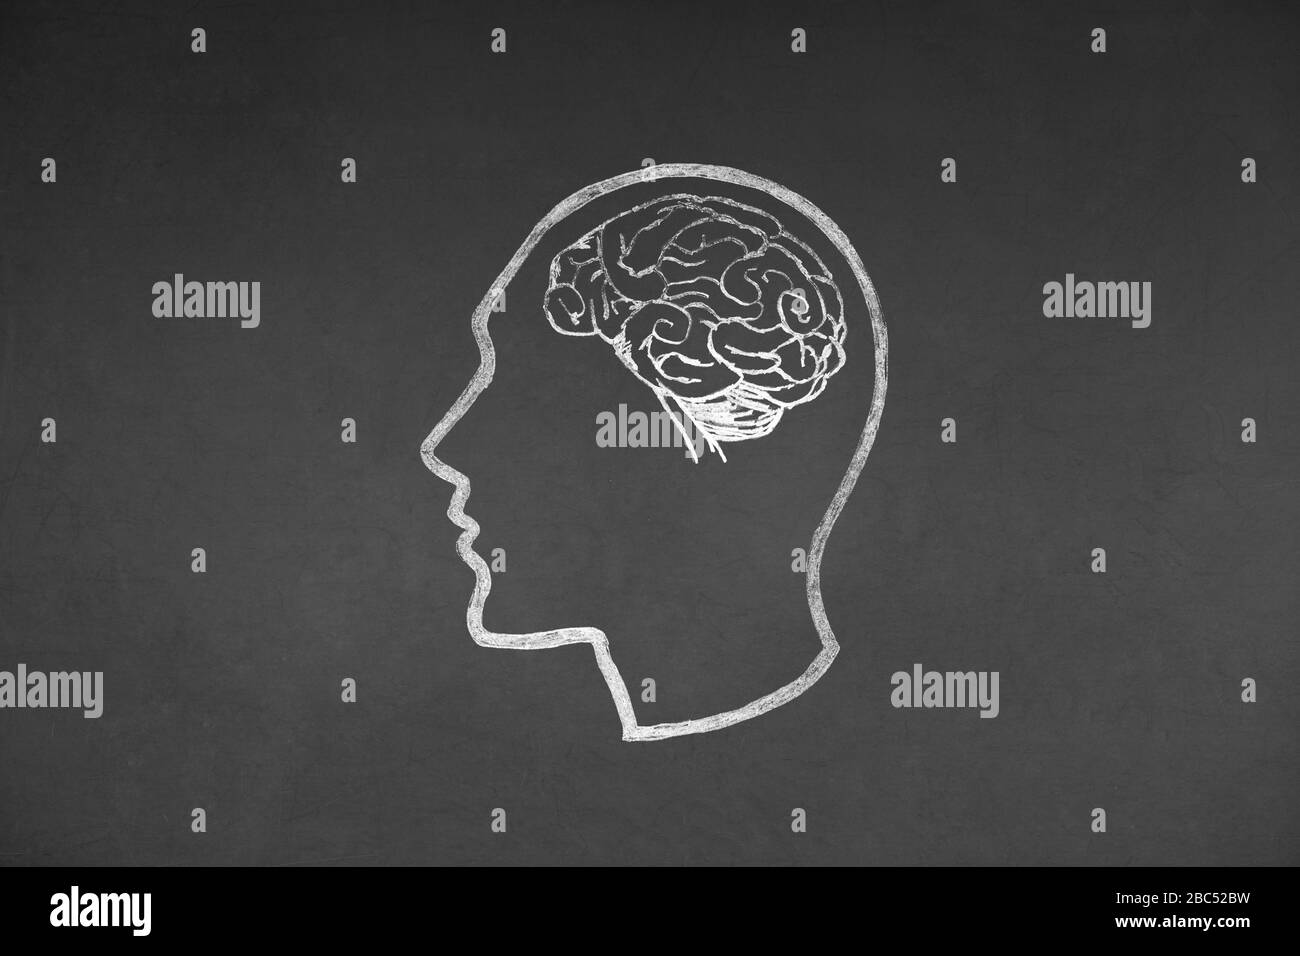 Human head and Brain Concept Drawing on Blackboard Texture Stock Photo